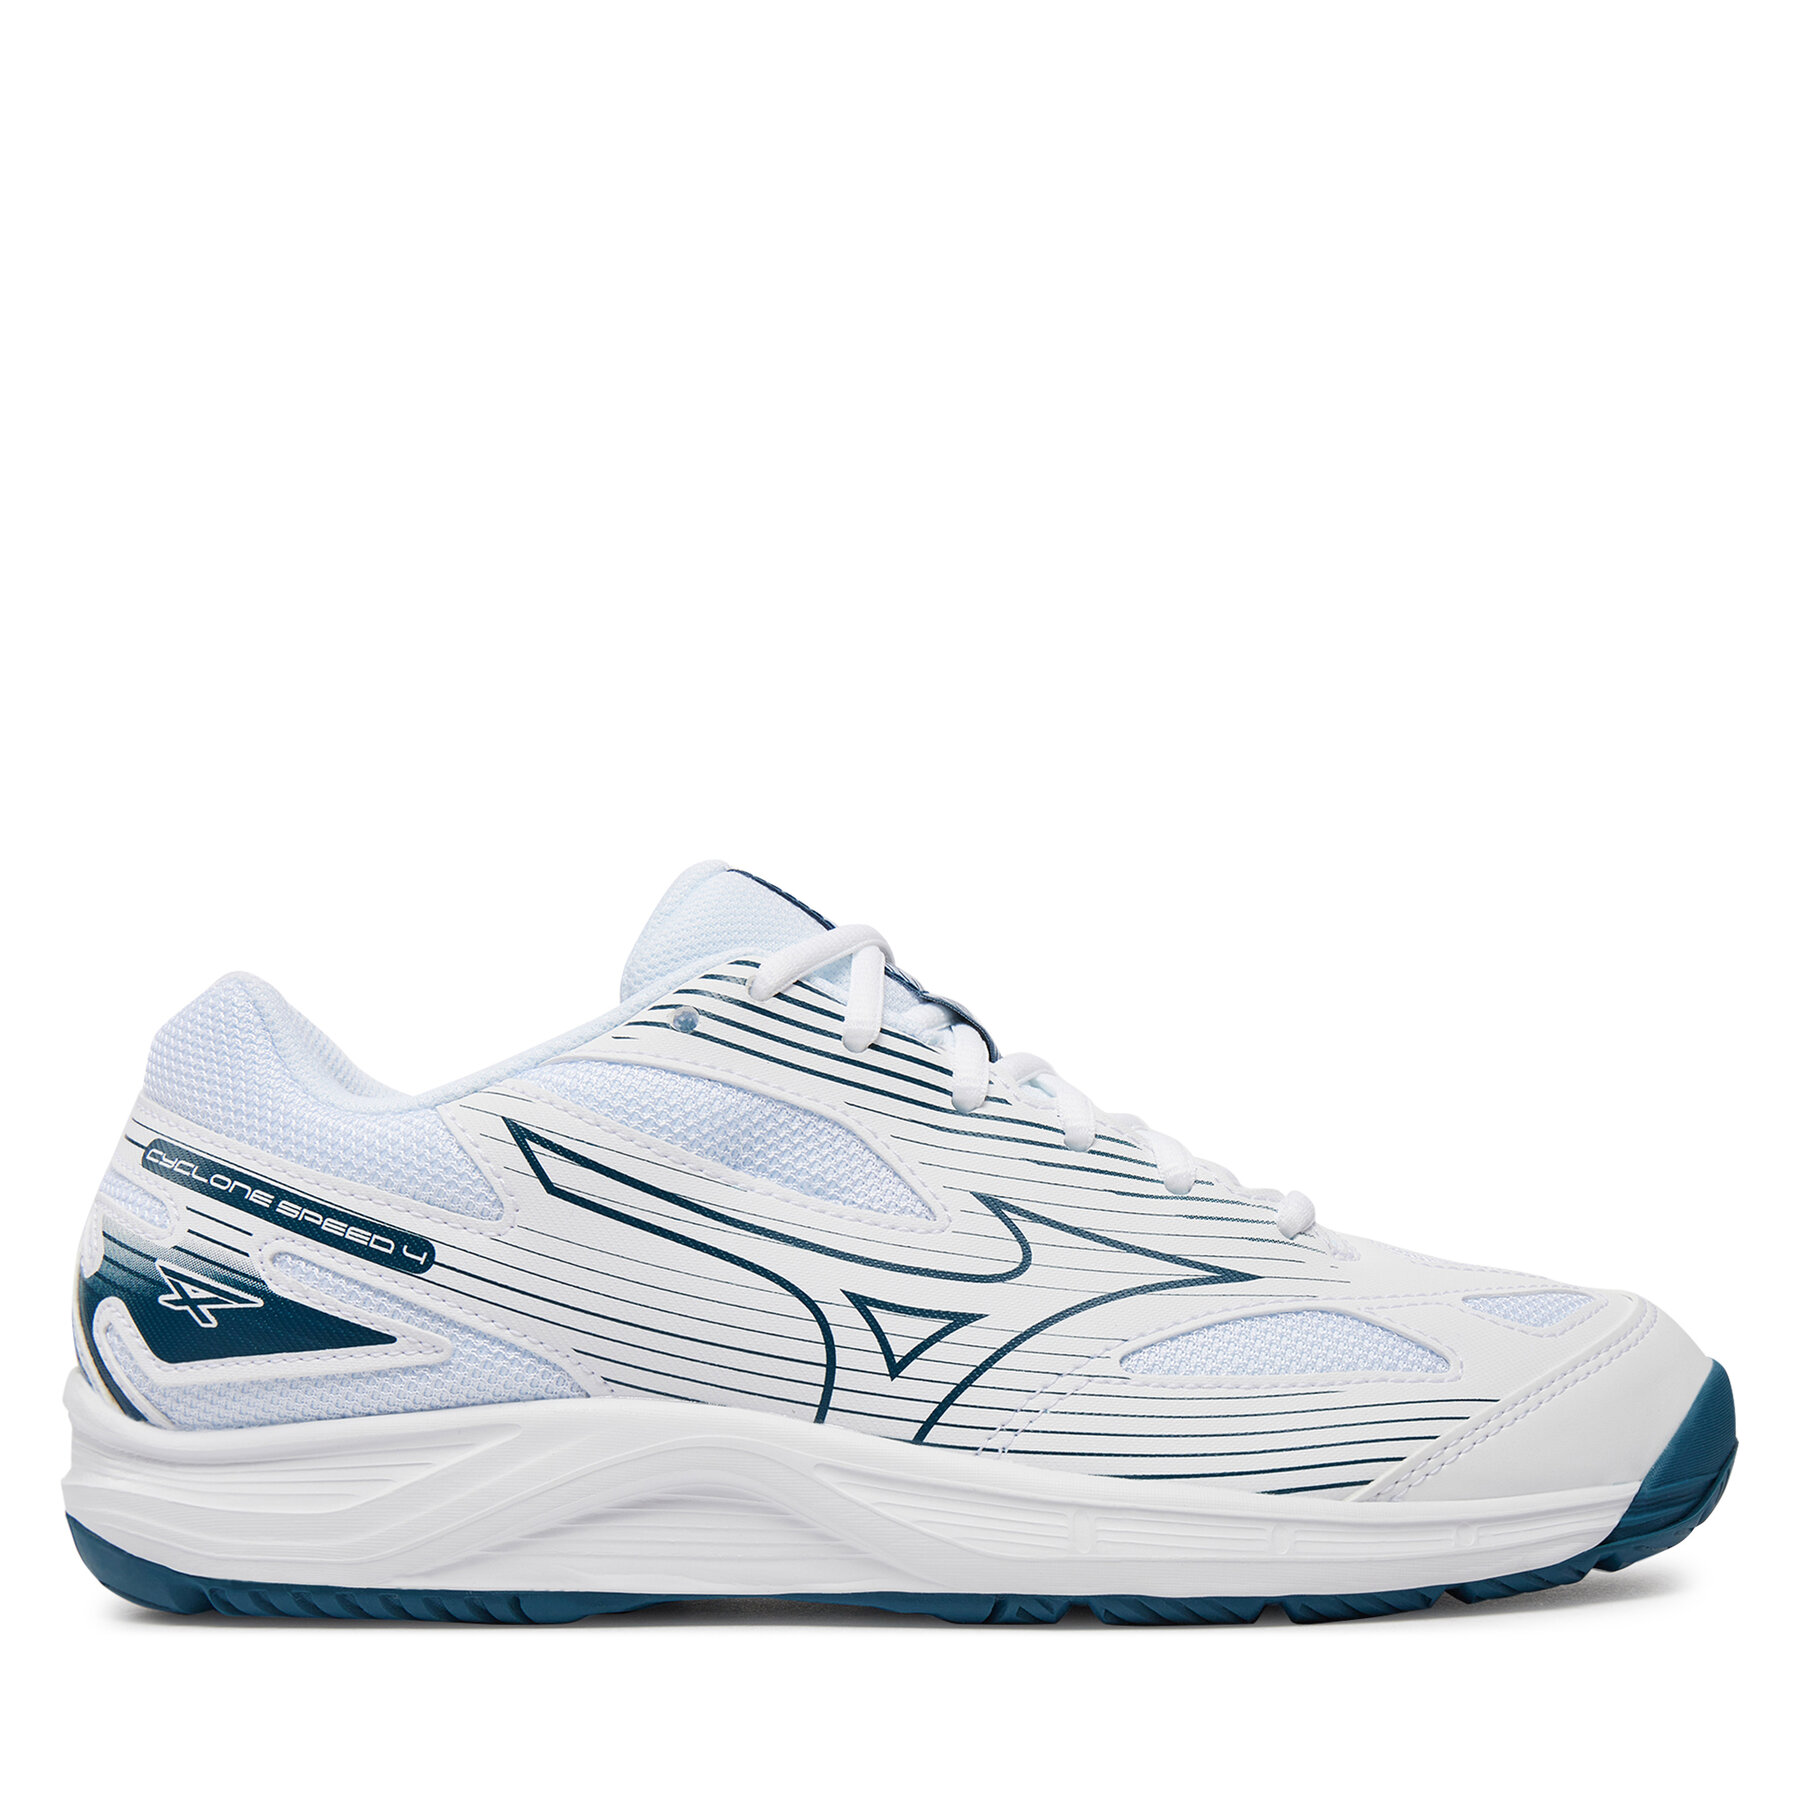 Čevlji Mizuno Cyclone Speed 4 V1GA2380 White/Sailor Blue/Silver 21